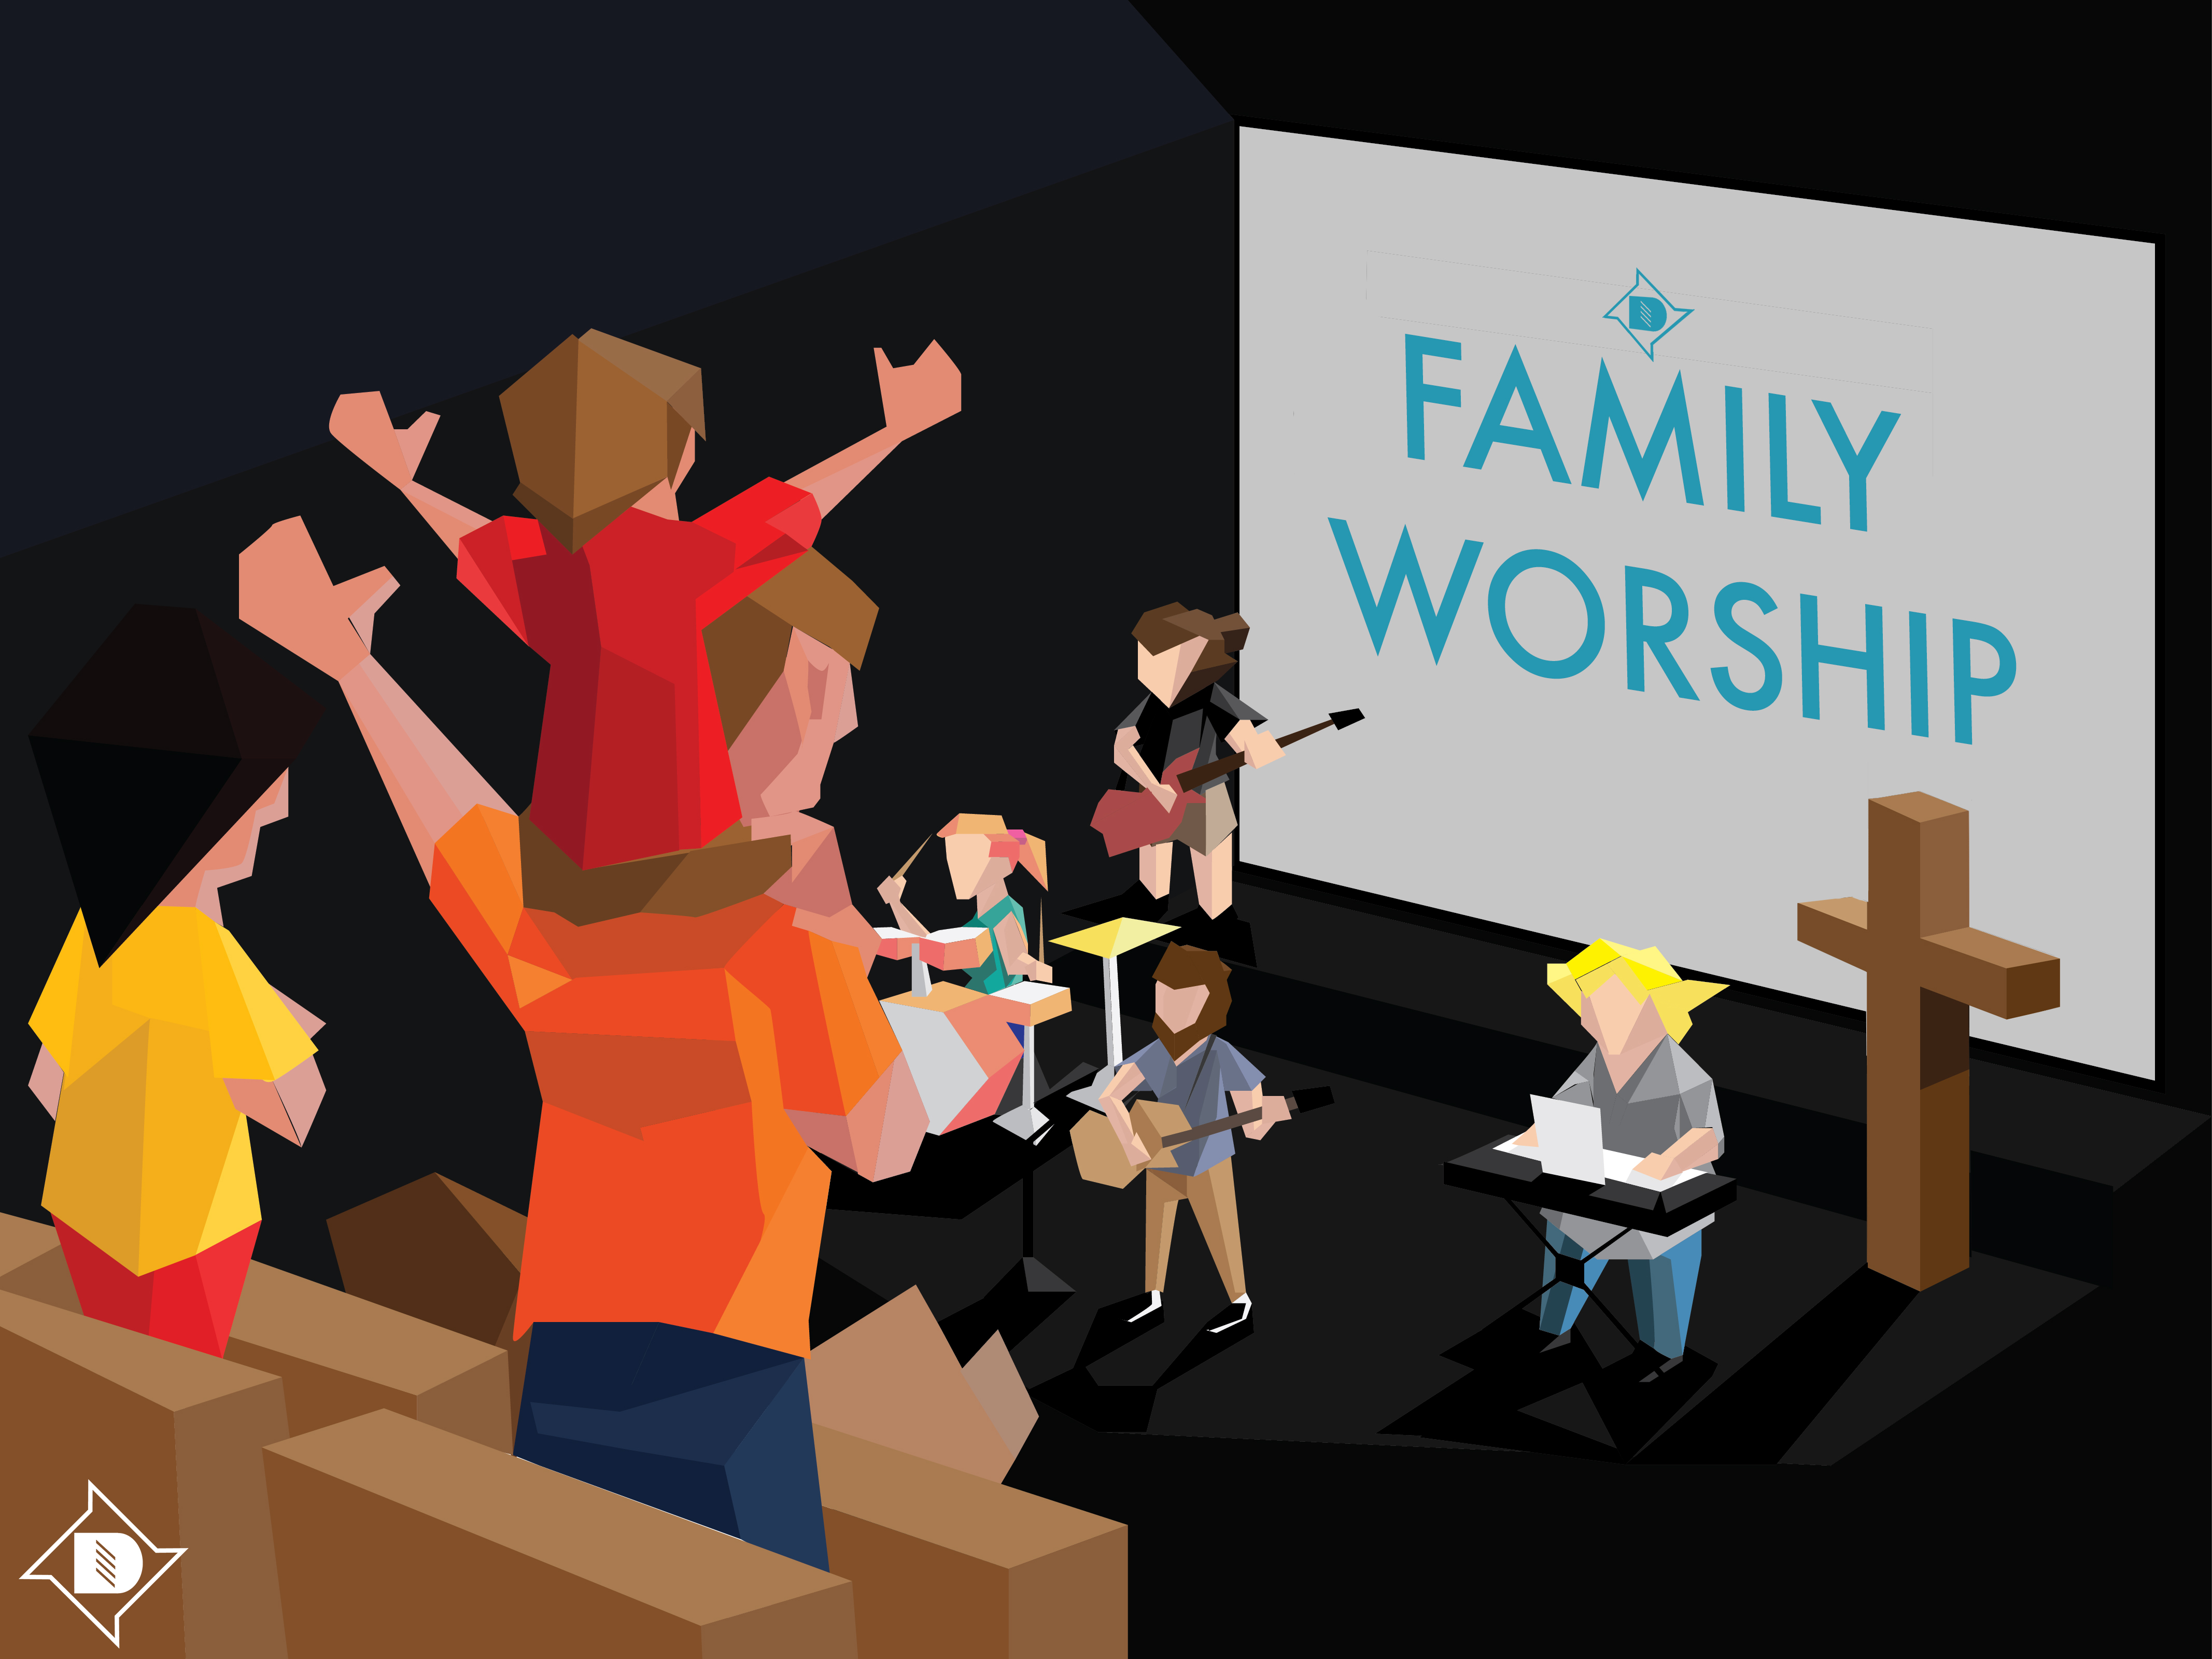 Family worship image